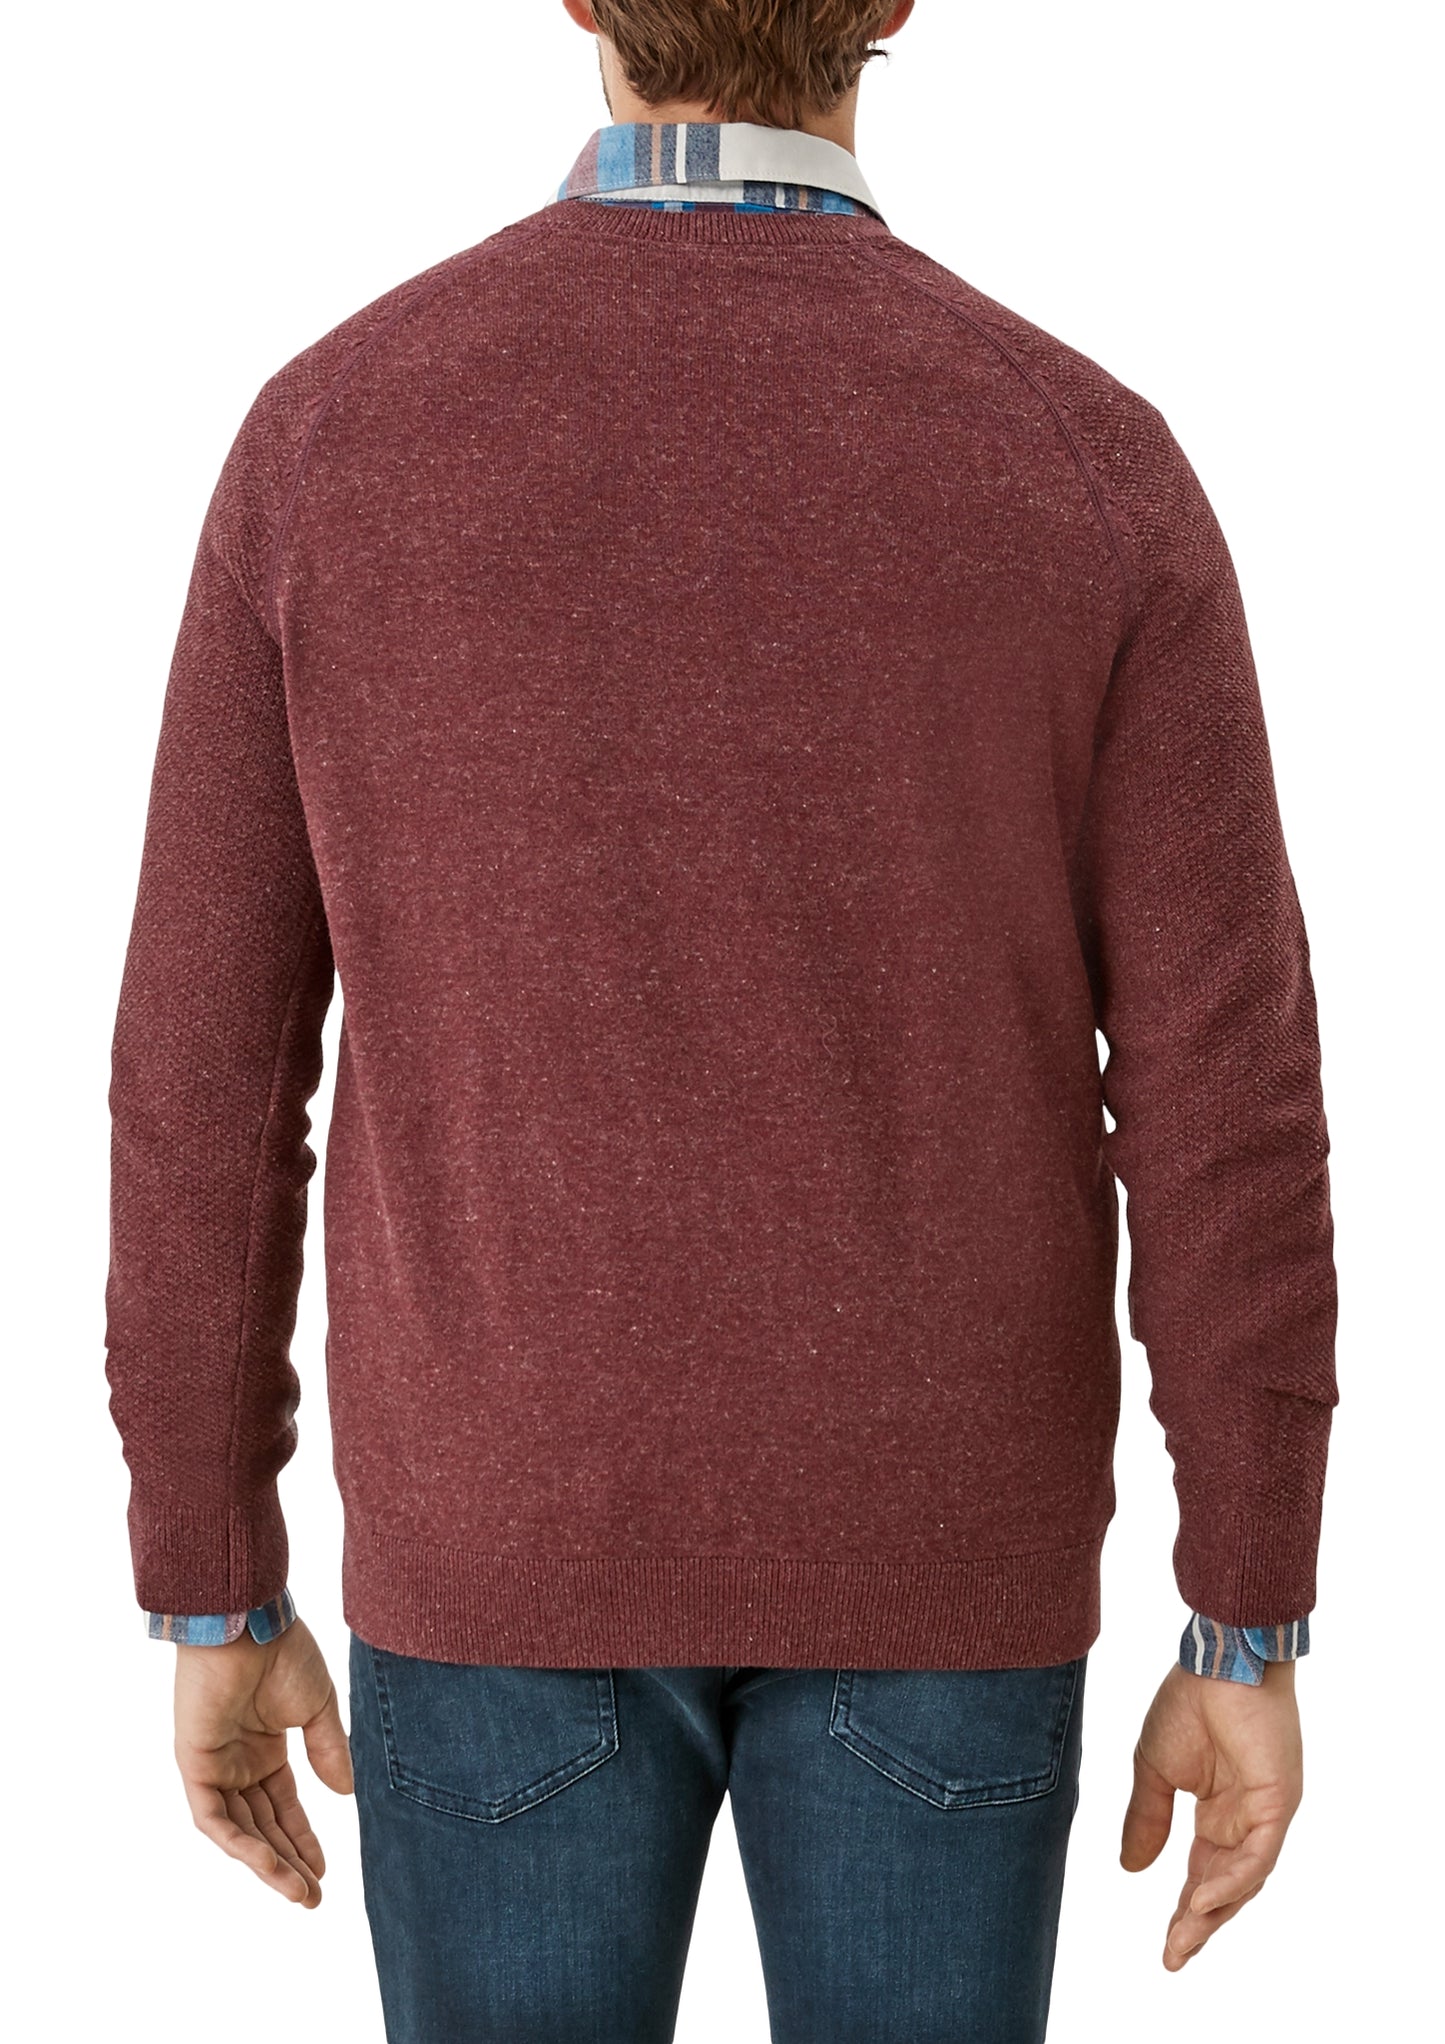 Long sleeve sweater